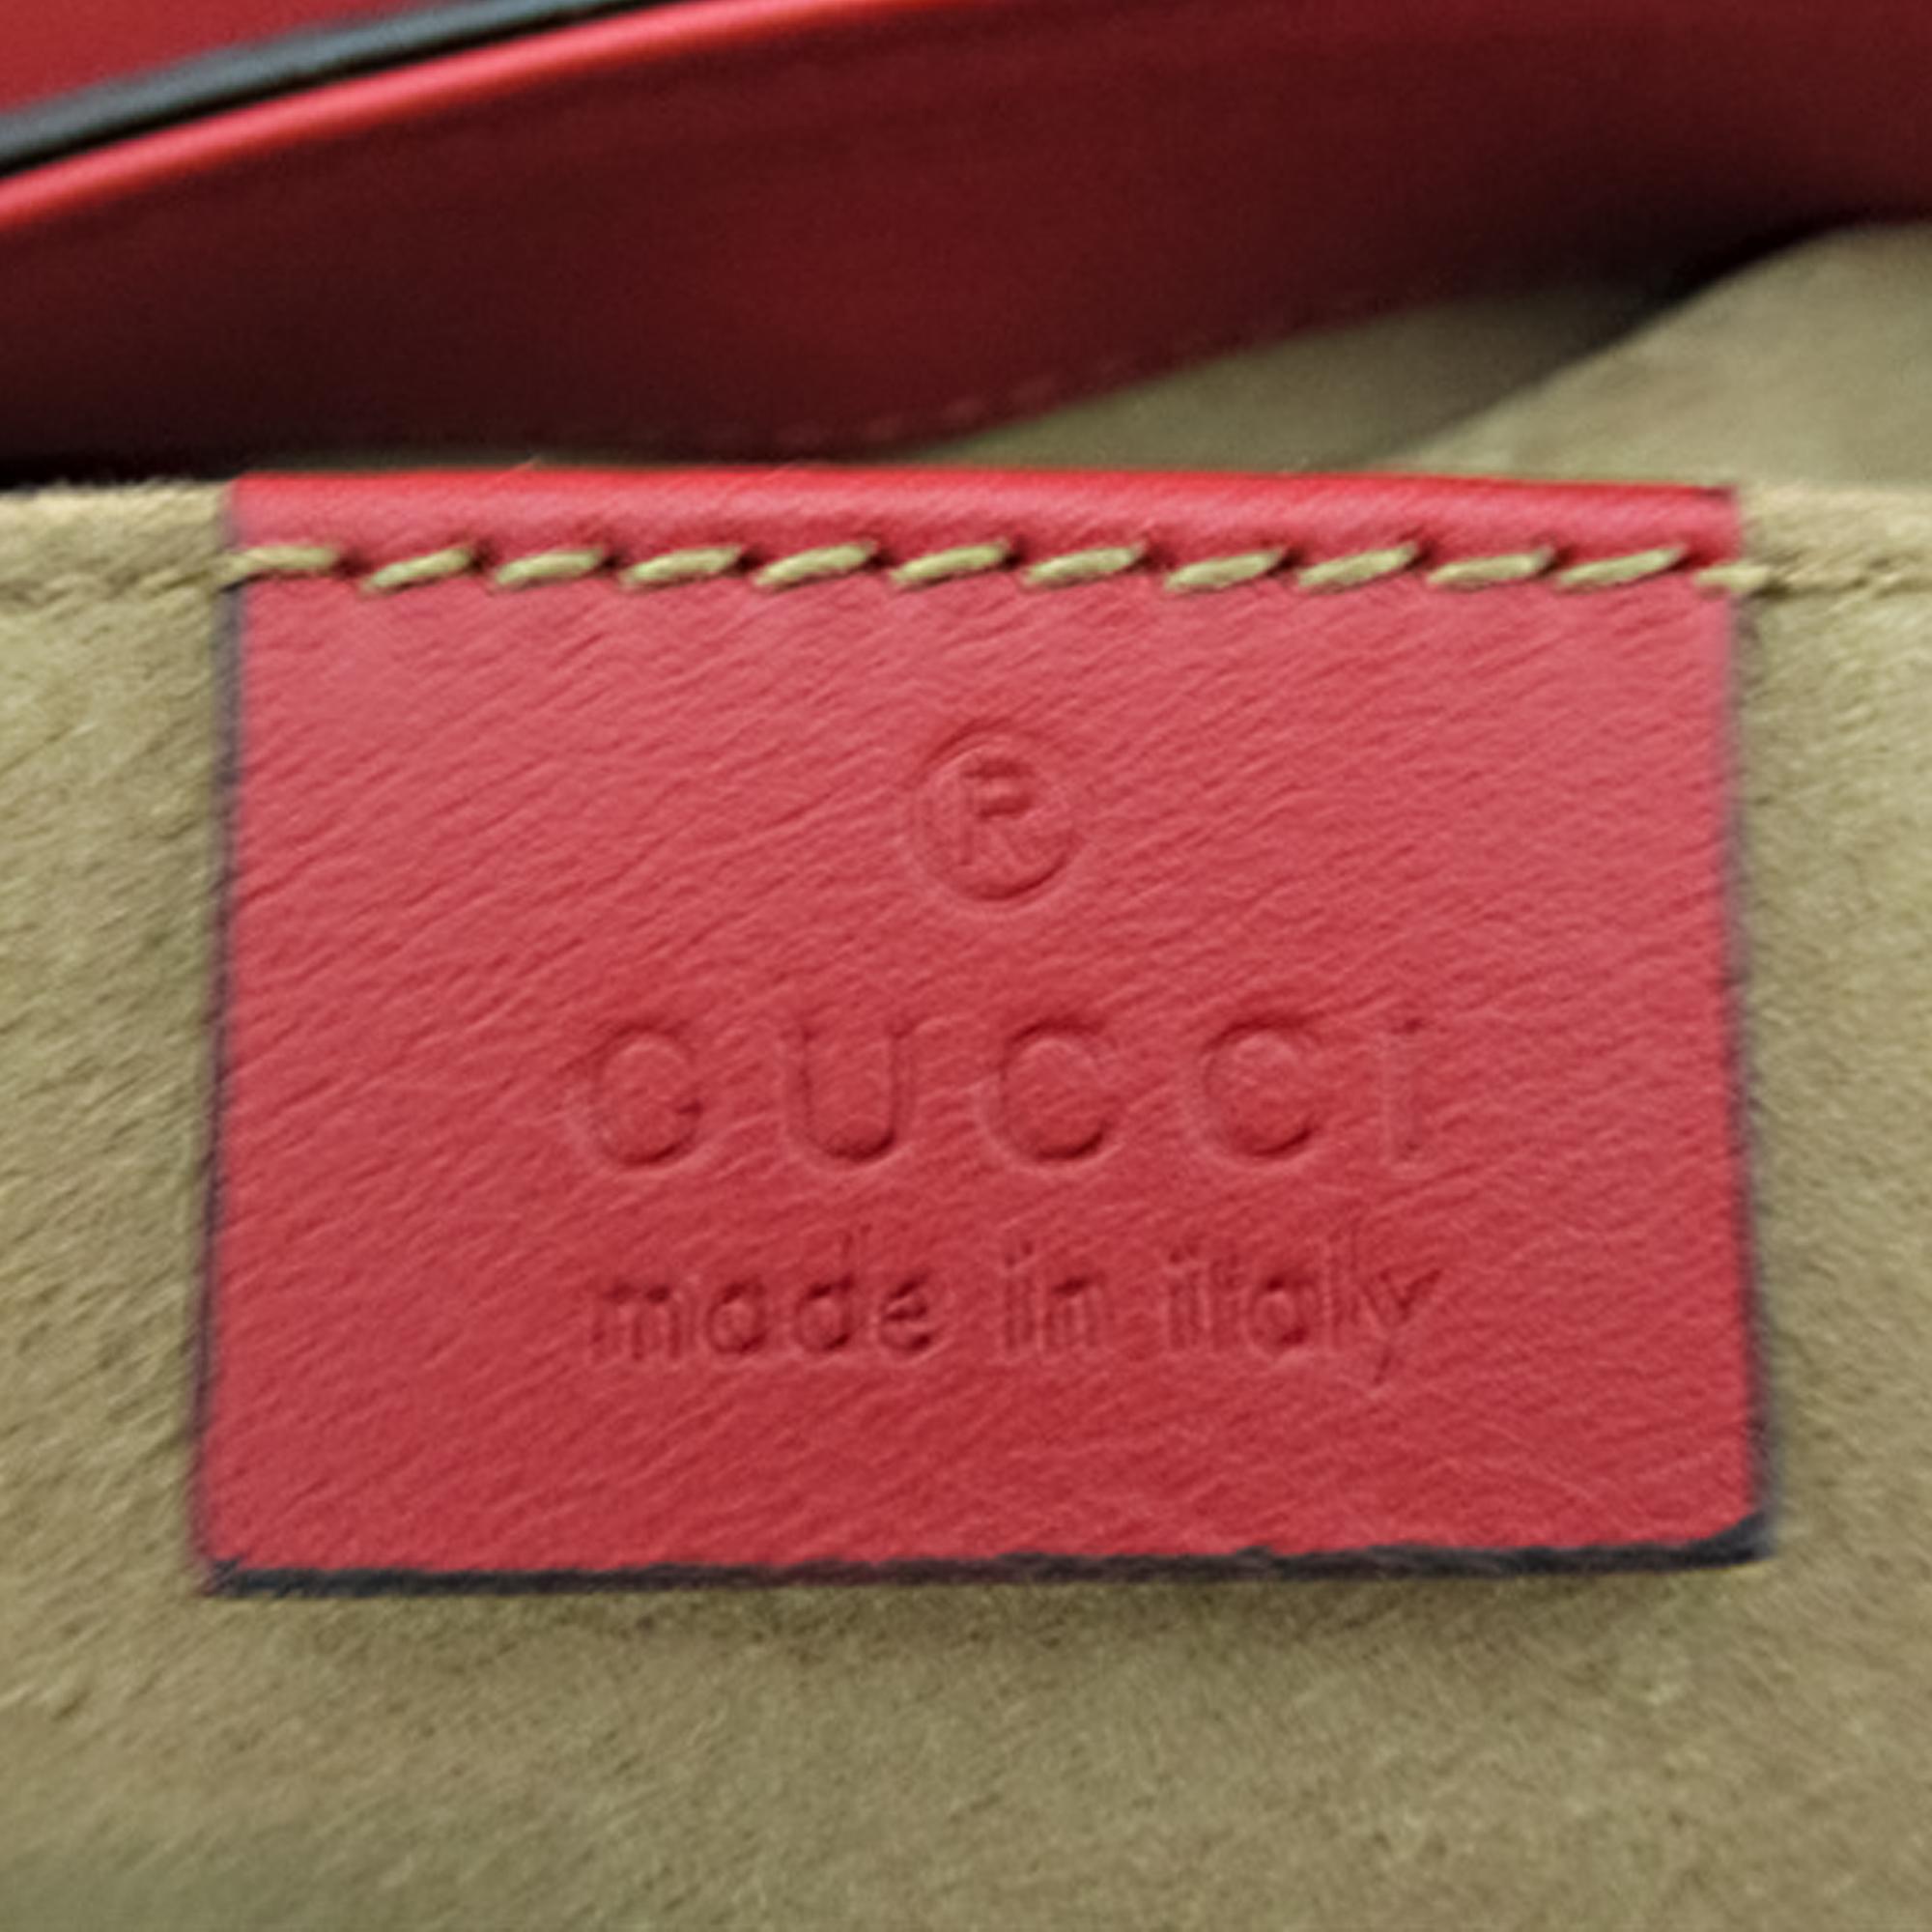 Gucci Multicolour GG Supreme Padlock Backpack